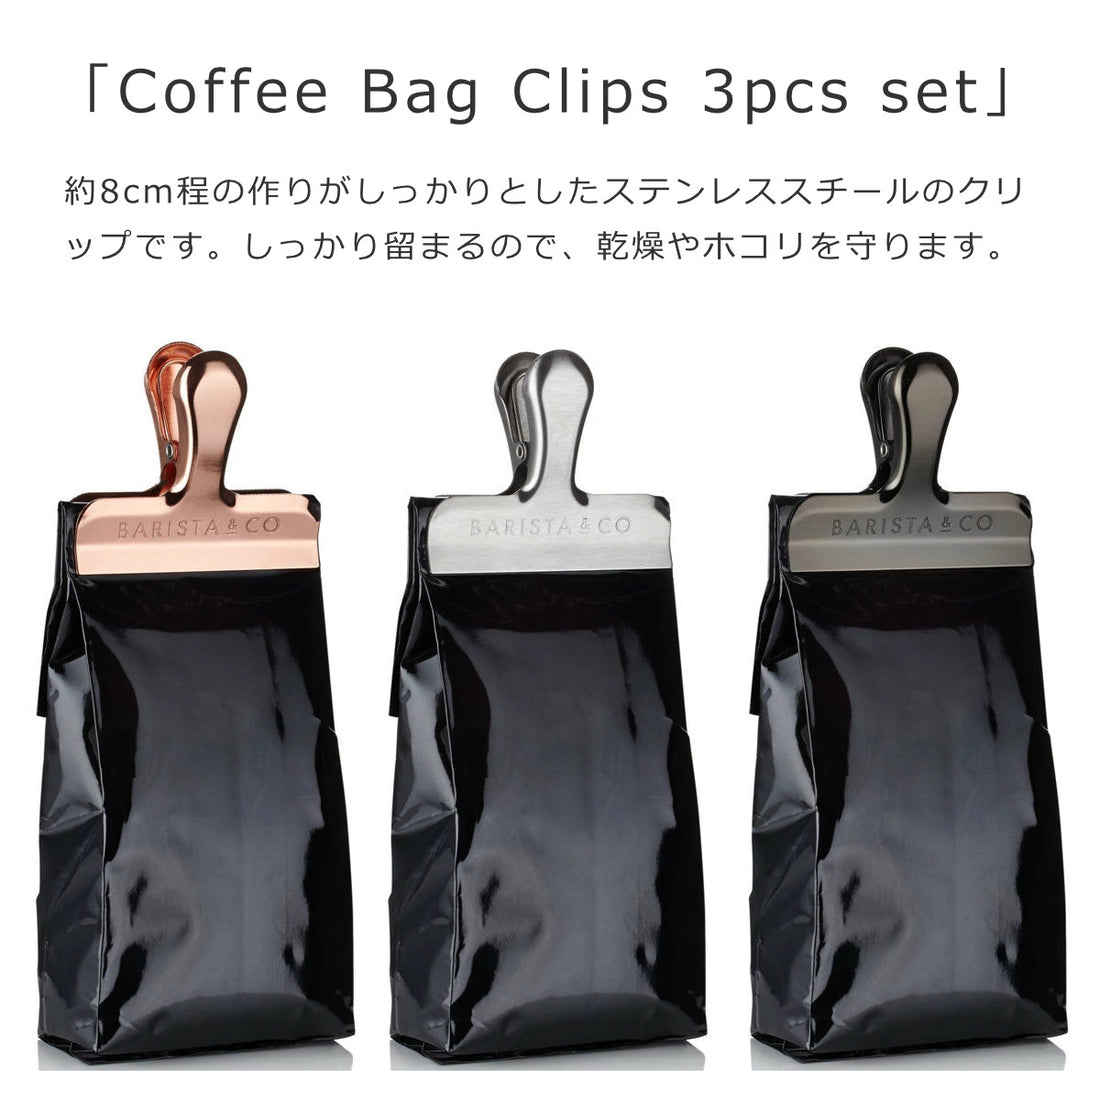 Coffee Bag Clips 3pcs set コーヒーバッグクリップ 3セット